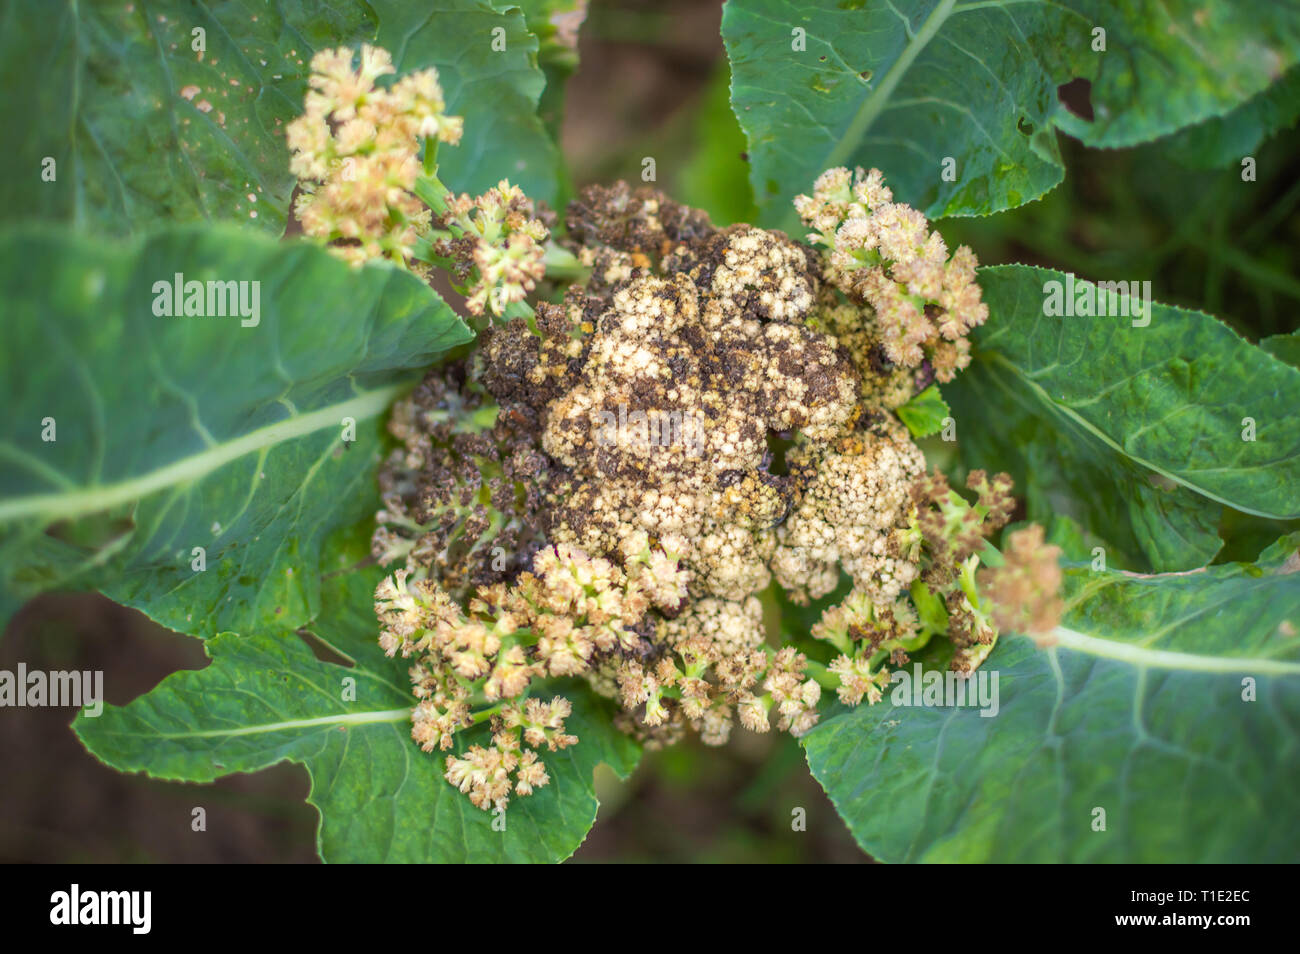 Diseased cauliflower caused due to the attack of fungus Sclerotinia sclerotiorum Stock Photo